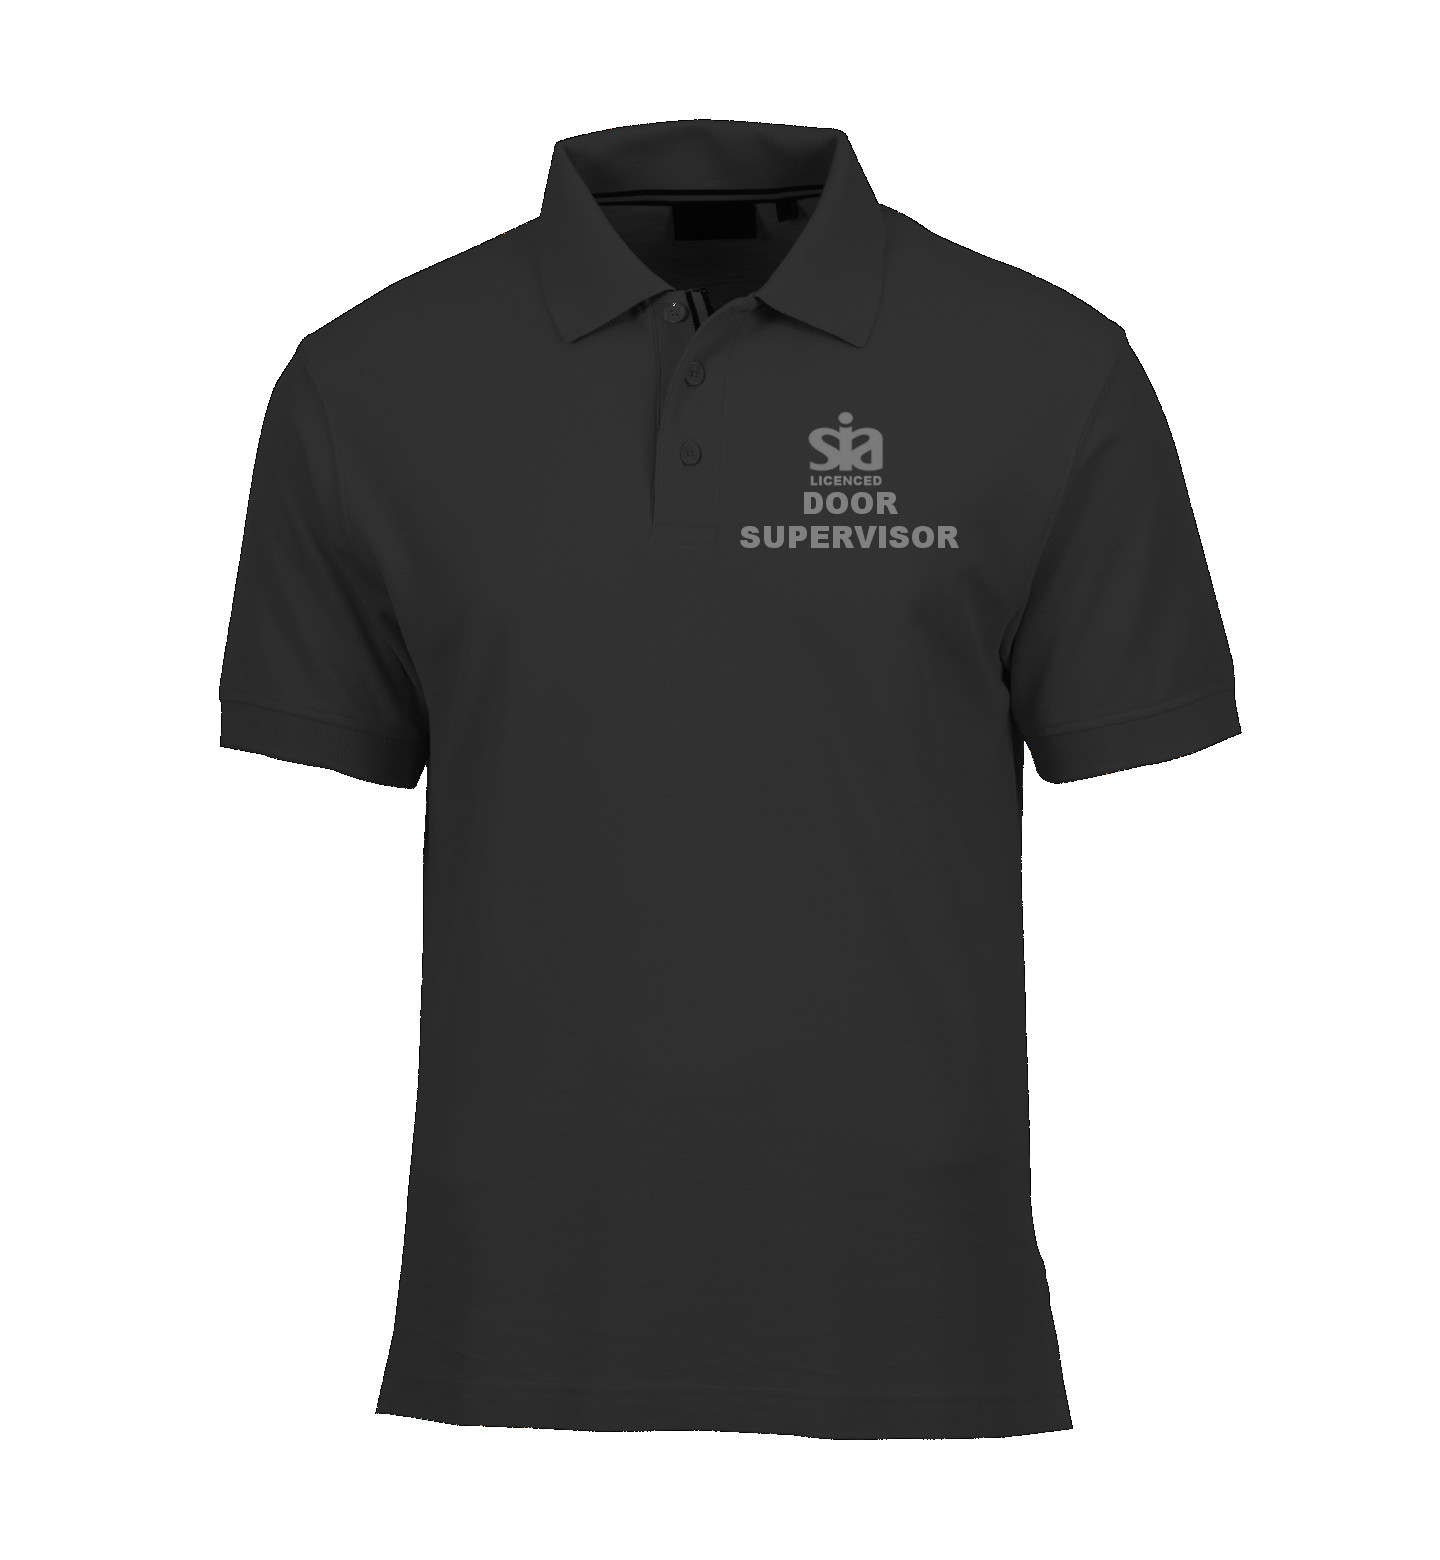 SIA Door Supervisor Polo Shirt | Milspec Tees Store